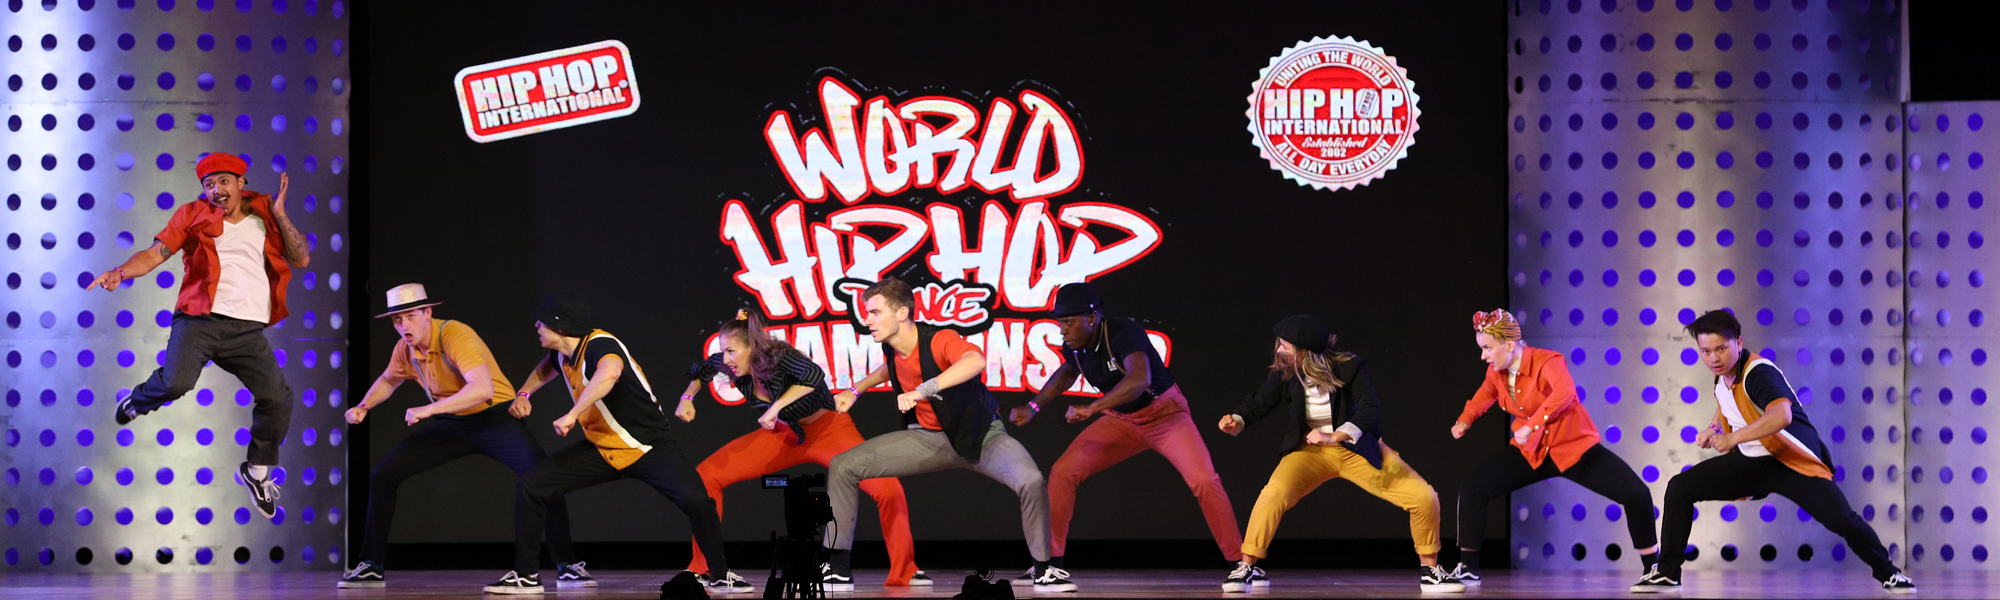 Hip Hop International Netherlands